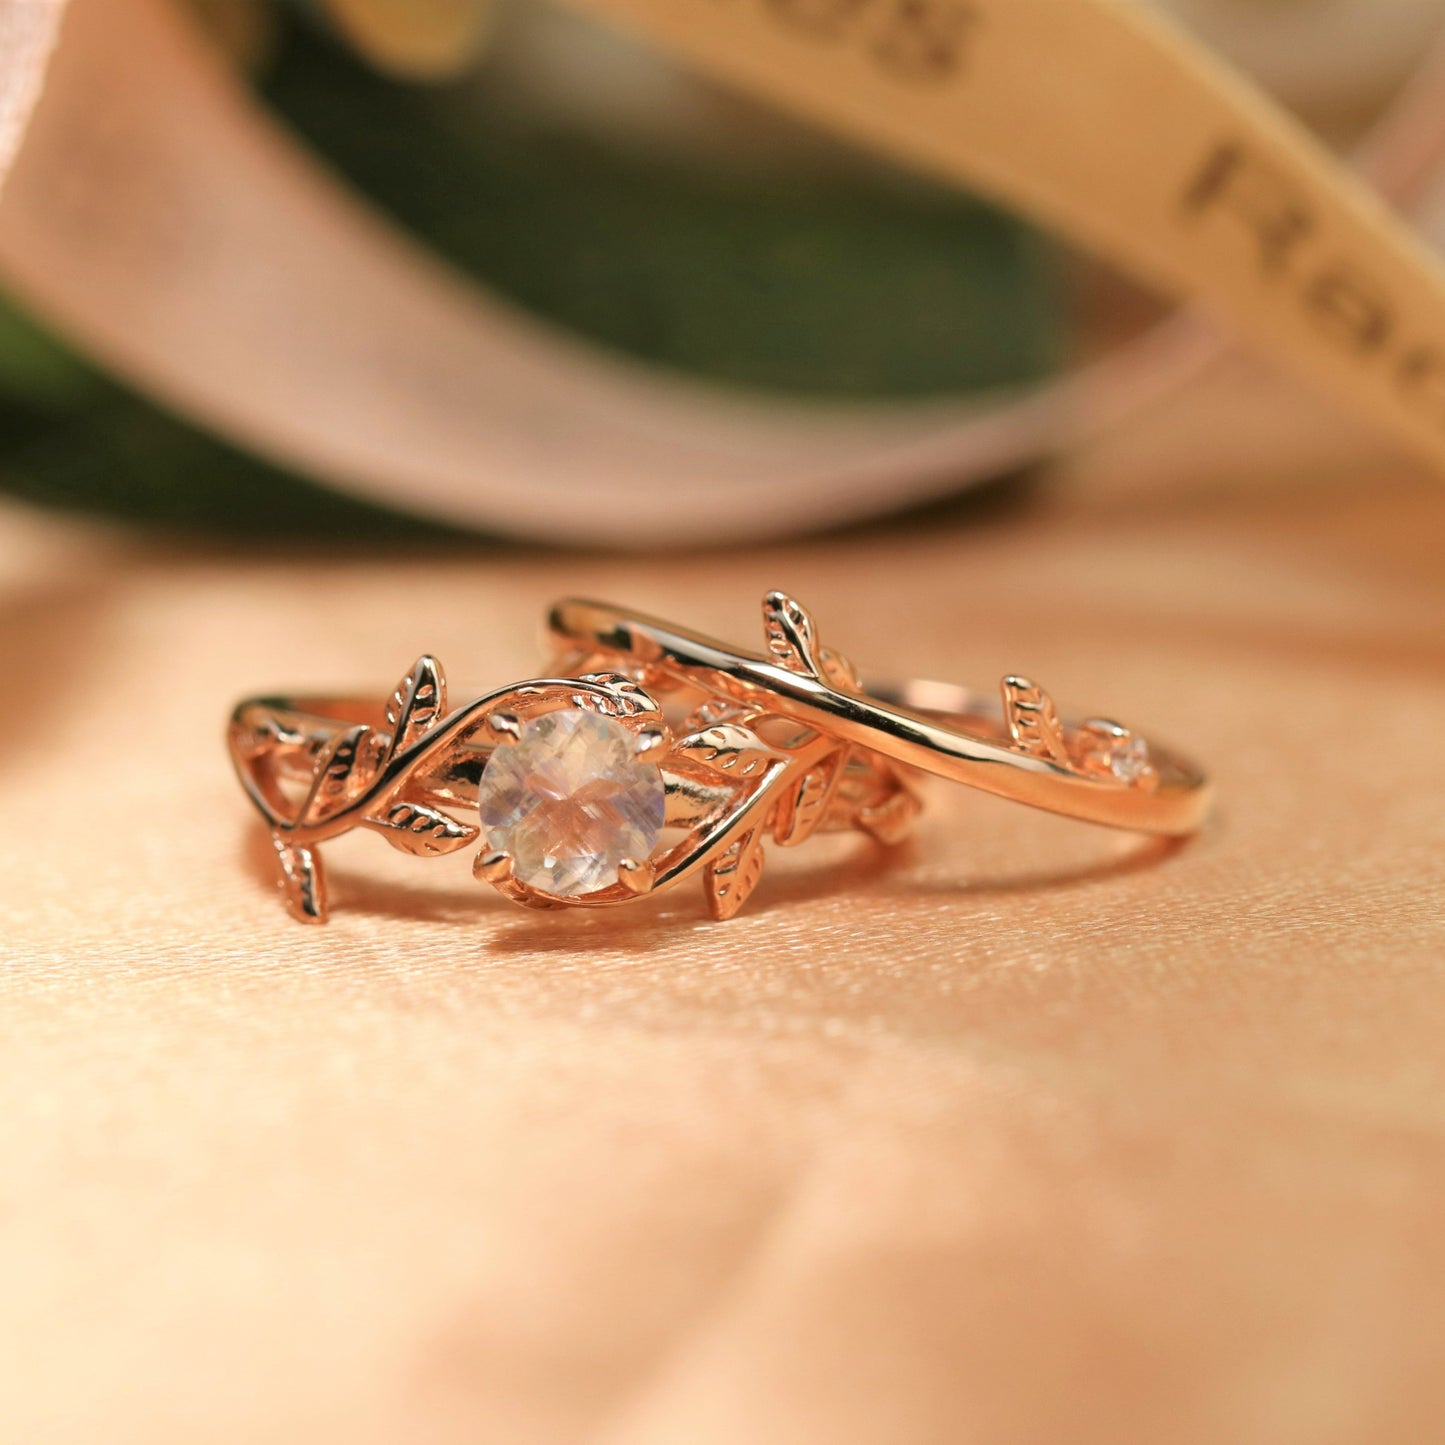 Leaf Design 1 carat Round cut rainbow Moonstone Diamond Wedding Set with Matching Wedding Ring Band, Rose Gold